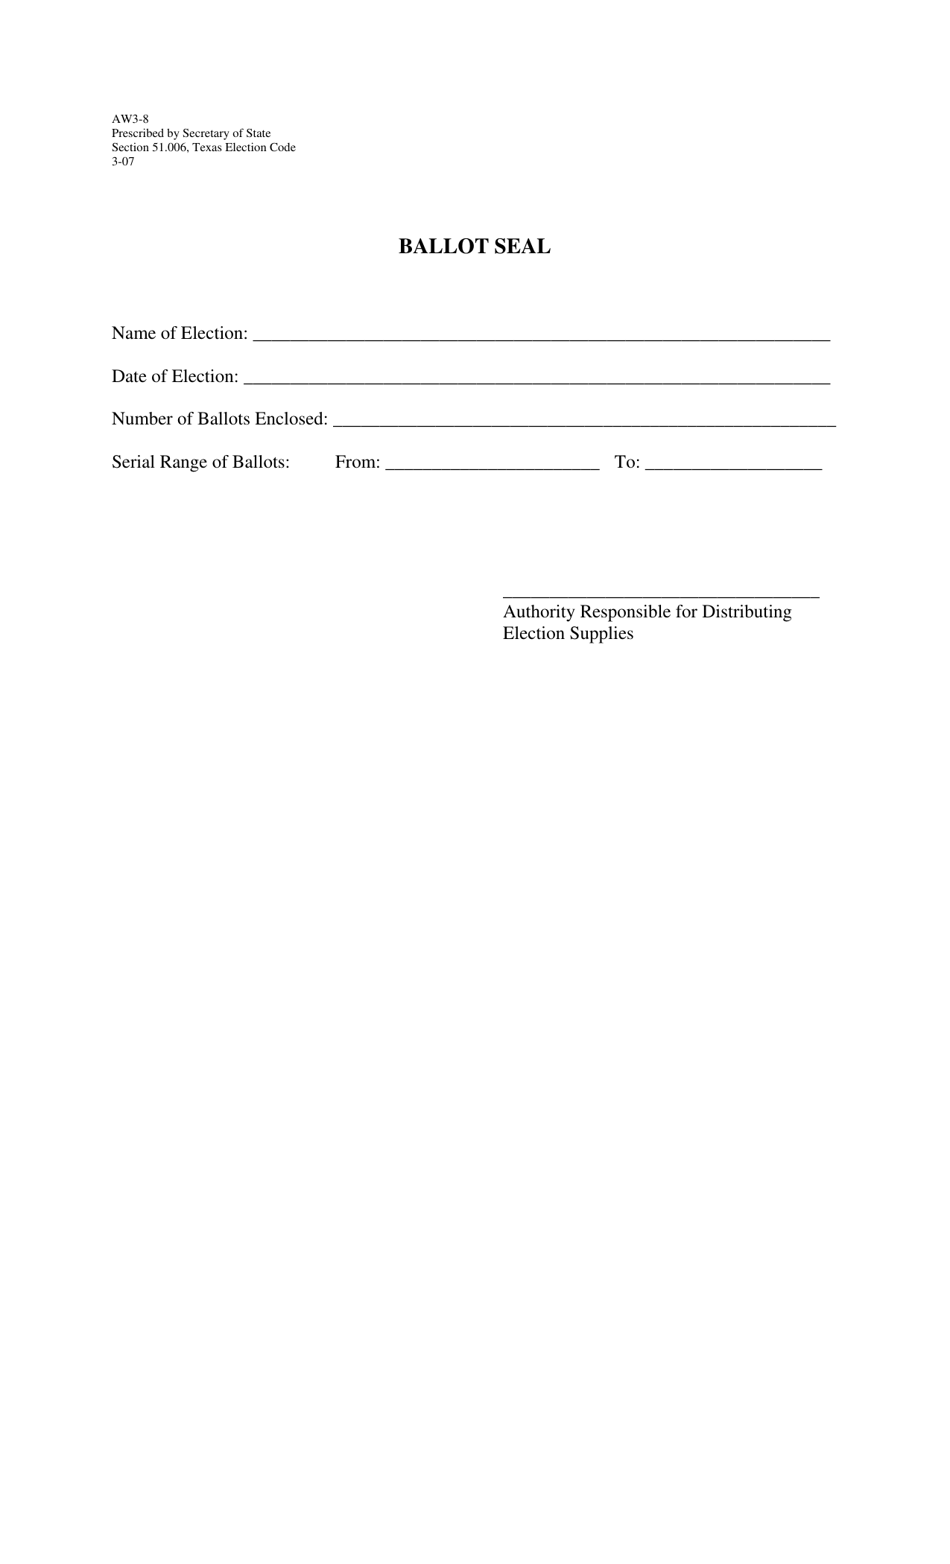 Form AW3-8 Ballot Seal - Texas, Page 1